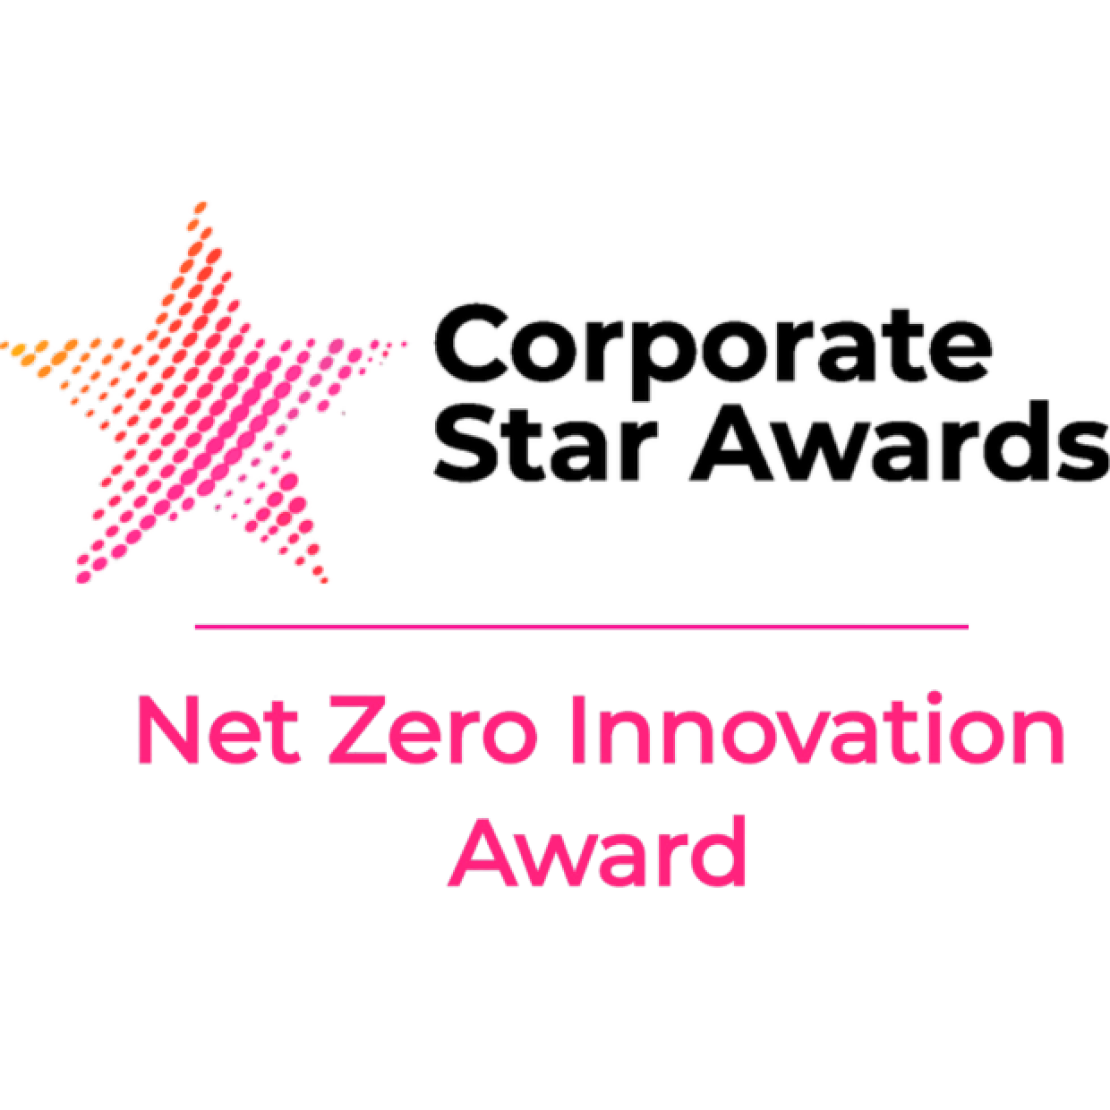 Corporate Star Awards - Net Zero Innovation Award